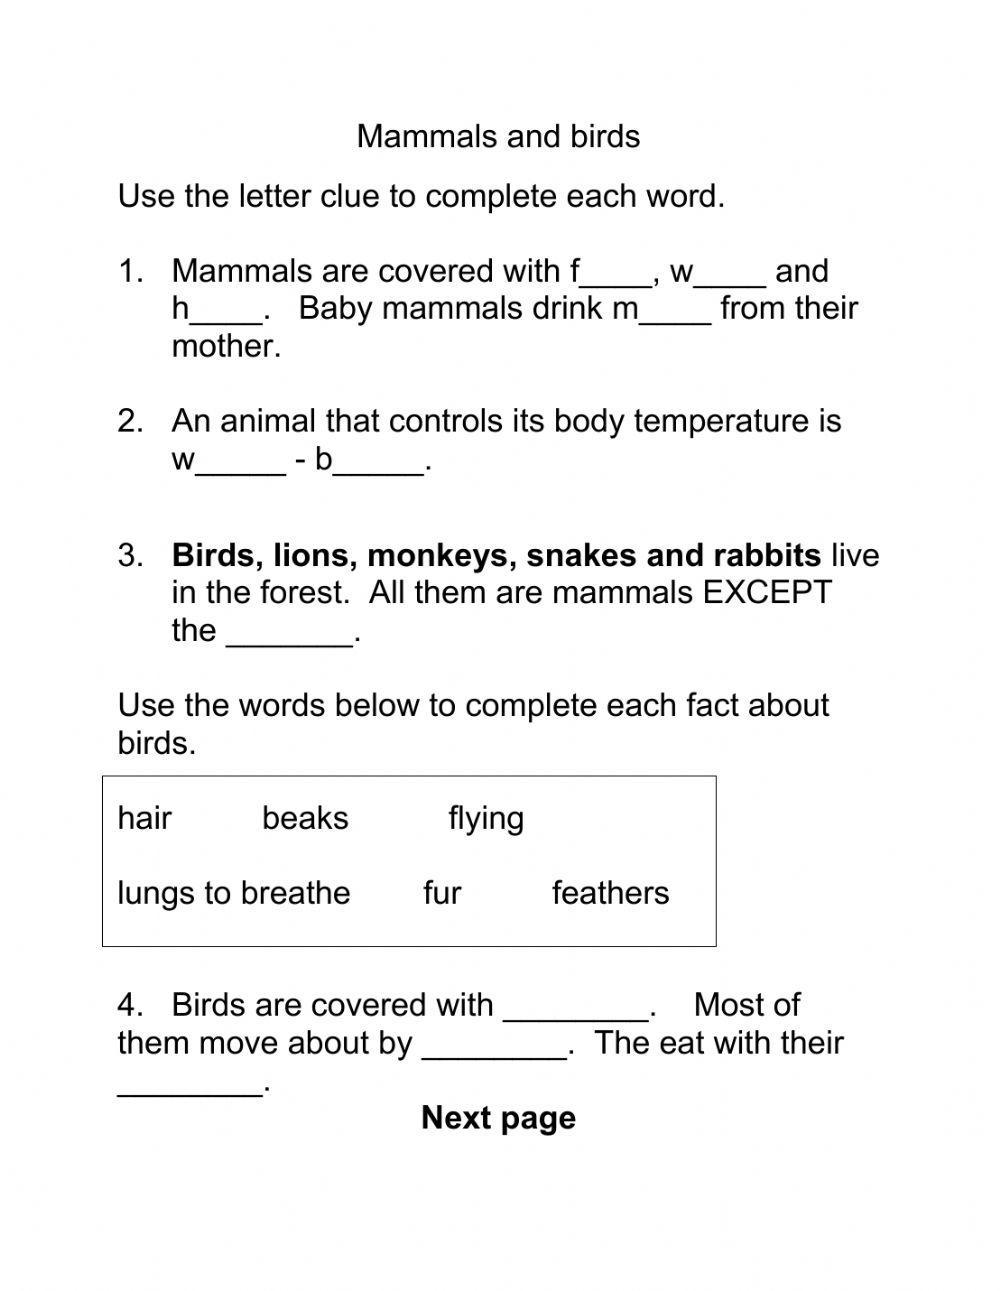 Mammals and birds